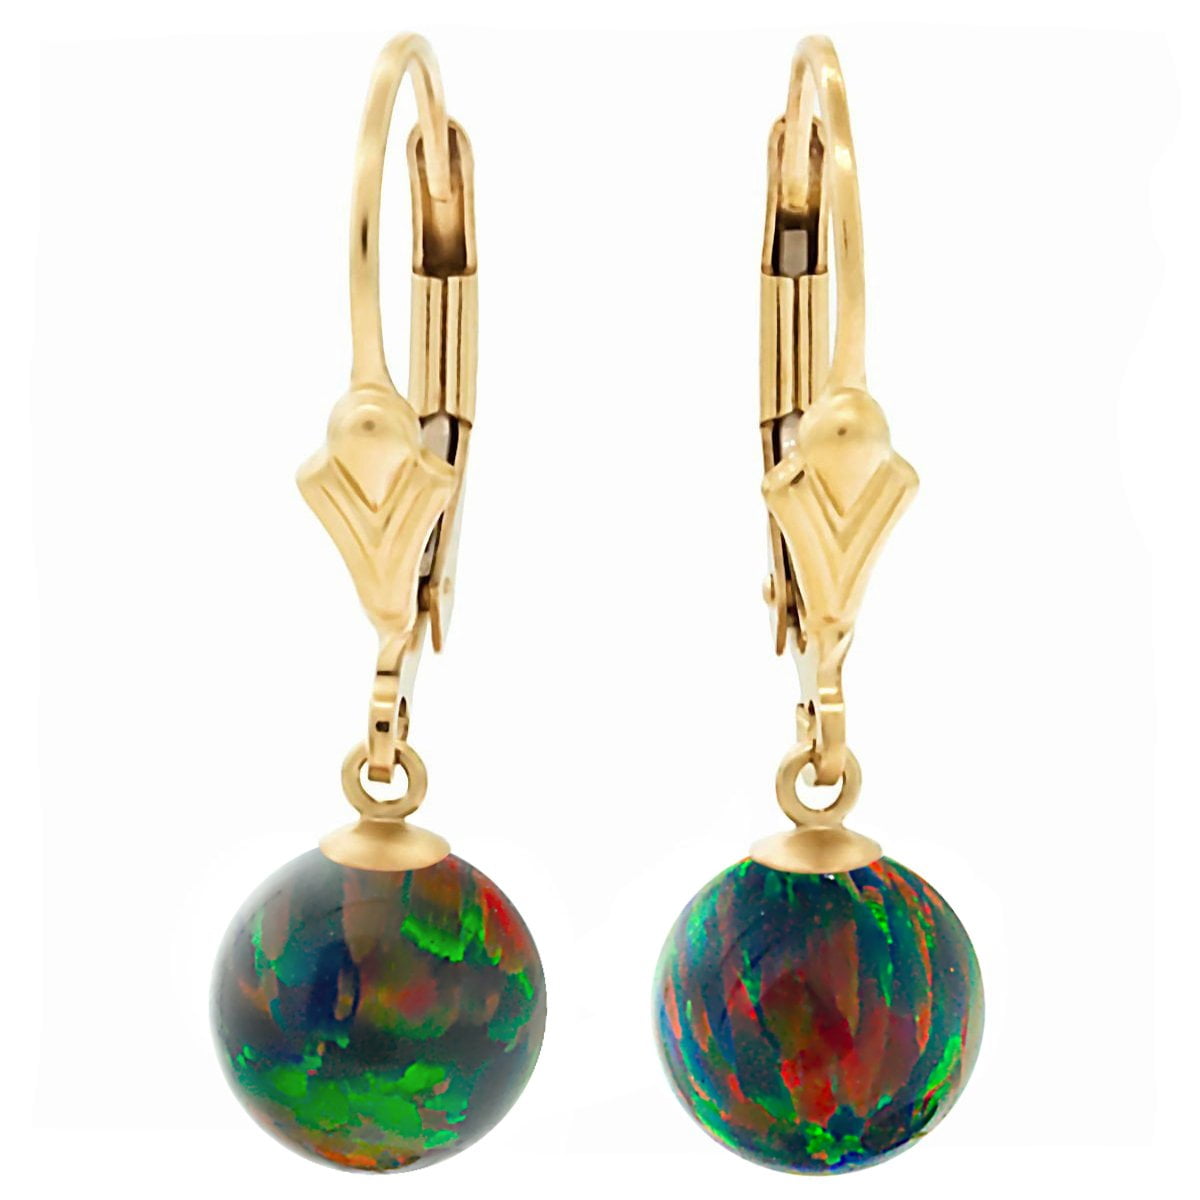 Details about   Lovely Green Peridot Gemstone Earrings 5.05 Ct Briolette 14k Rose Gold Jewelry 